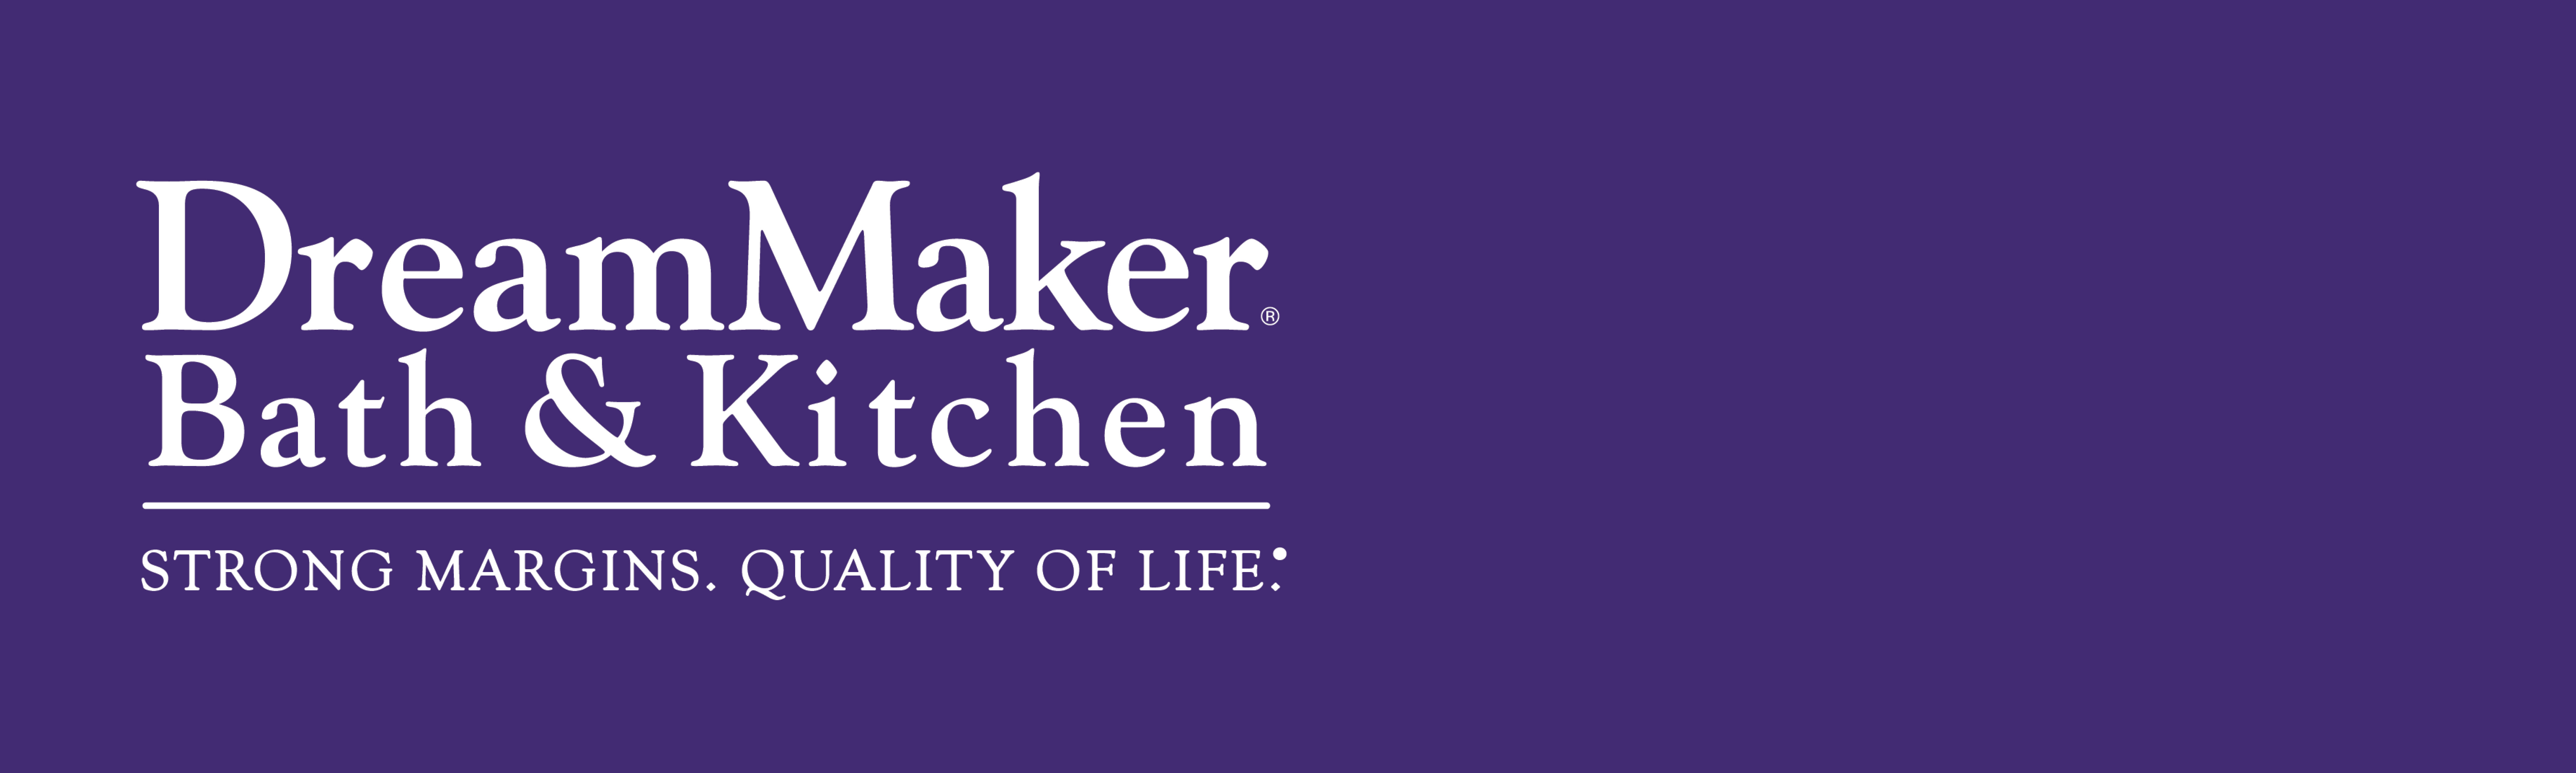 DreamMaker Bath & Kitchen Franchise